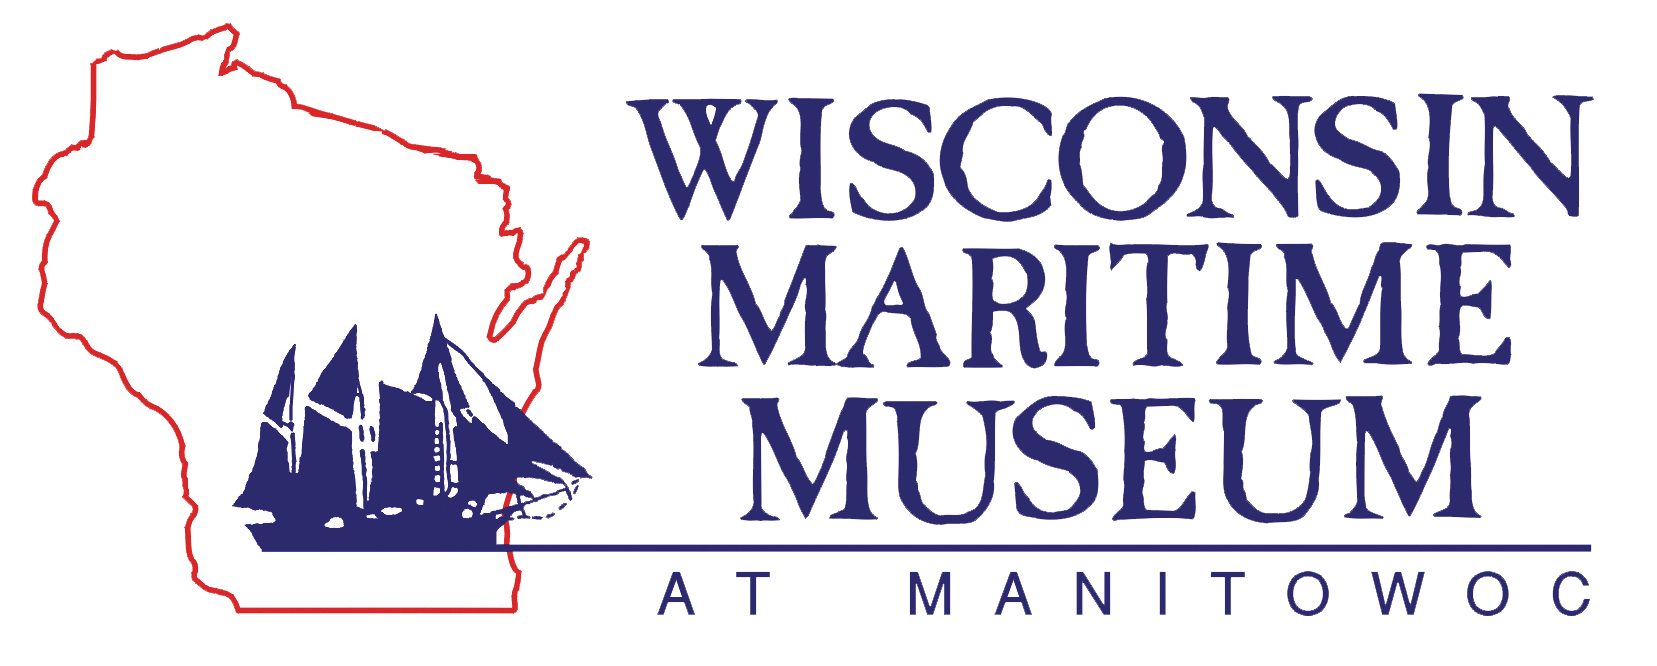 Wisconsin Maritime Museum logo